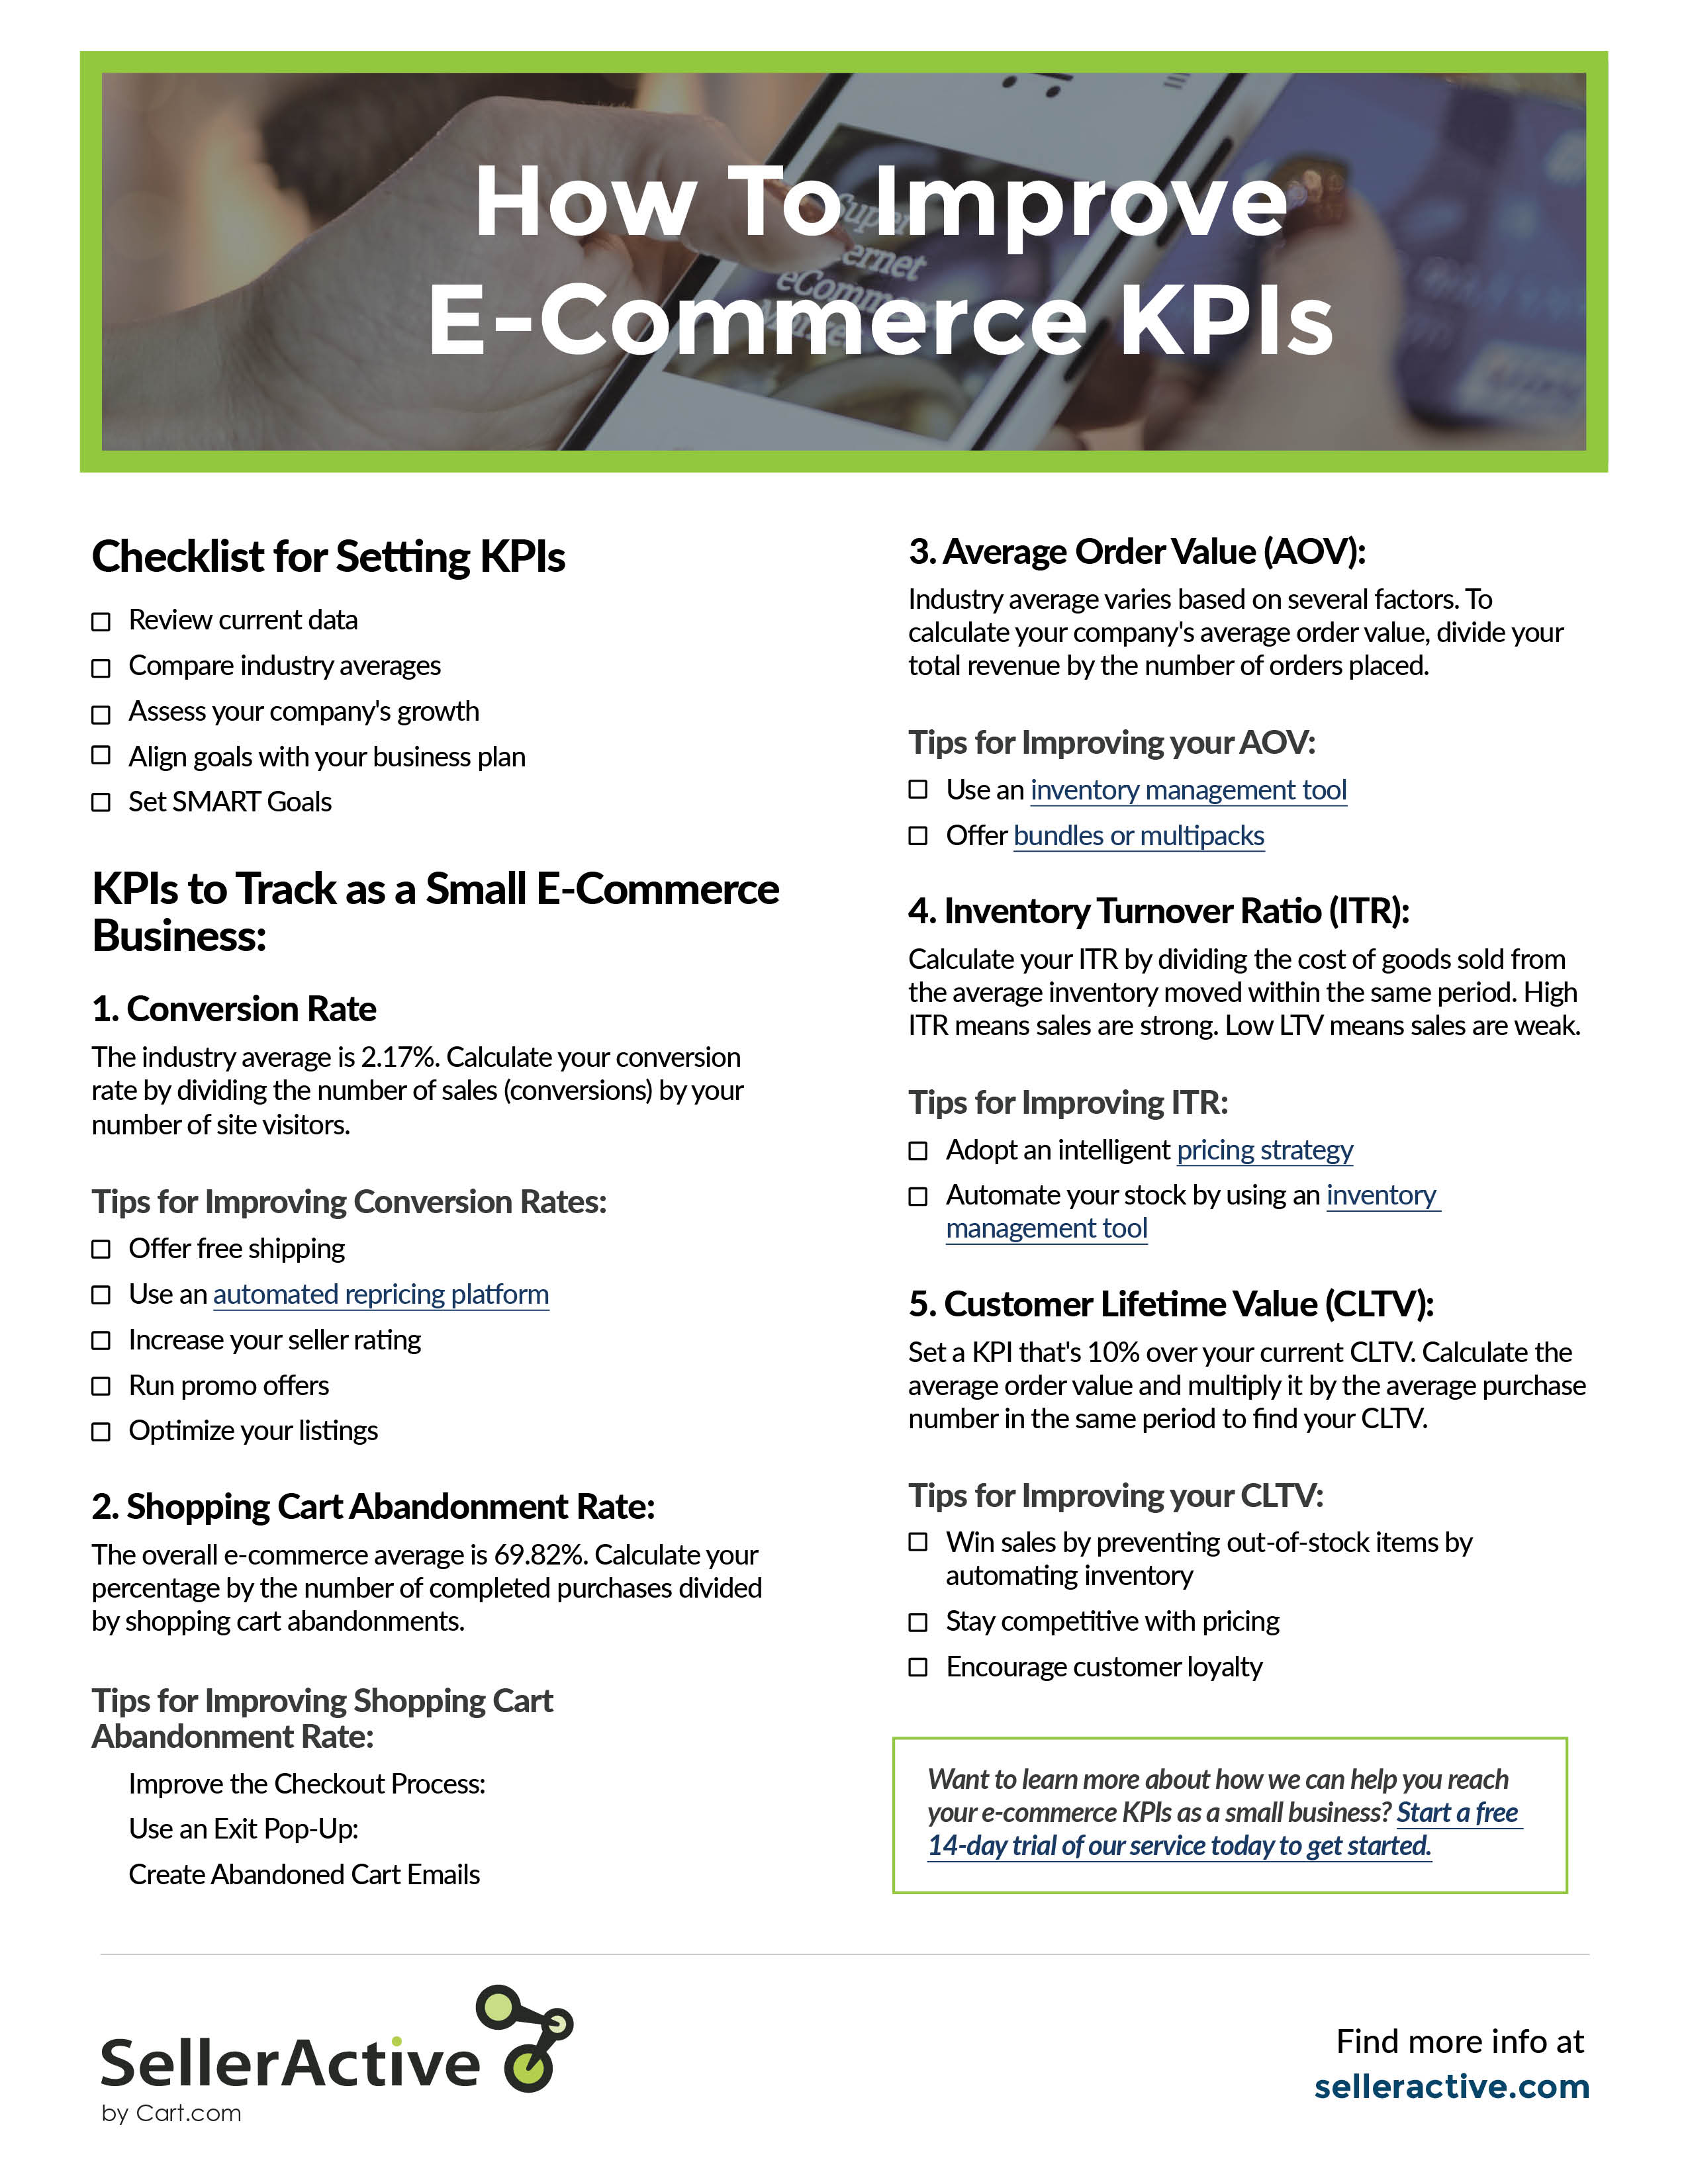 How-to-improve-e-commerce-kpis